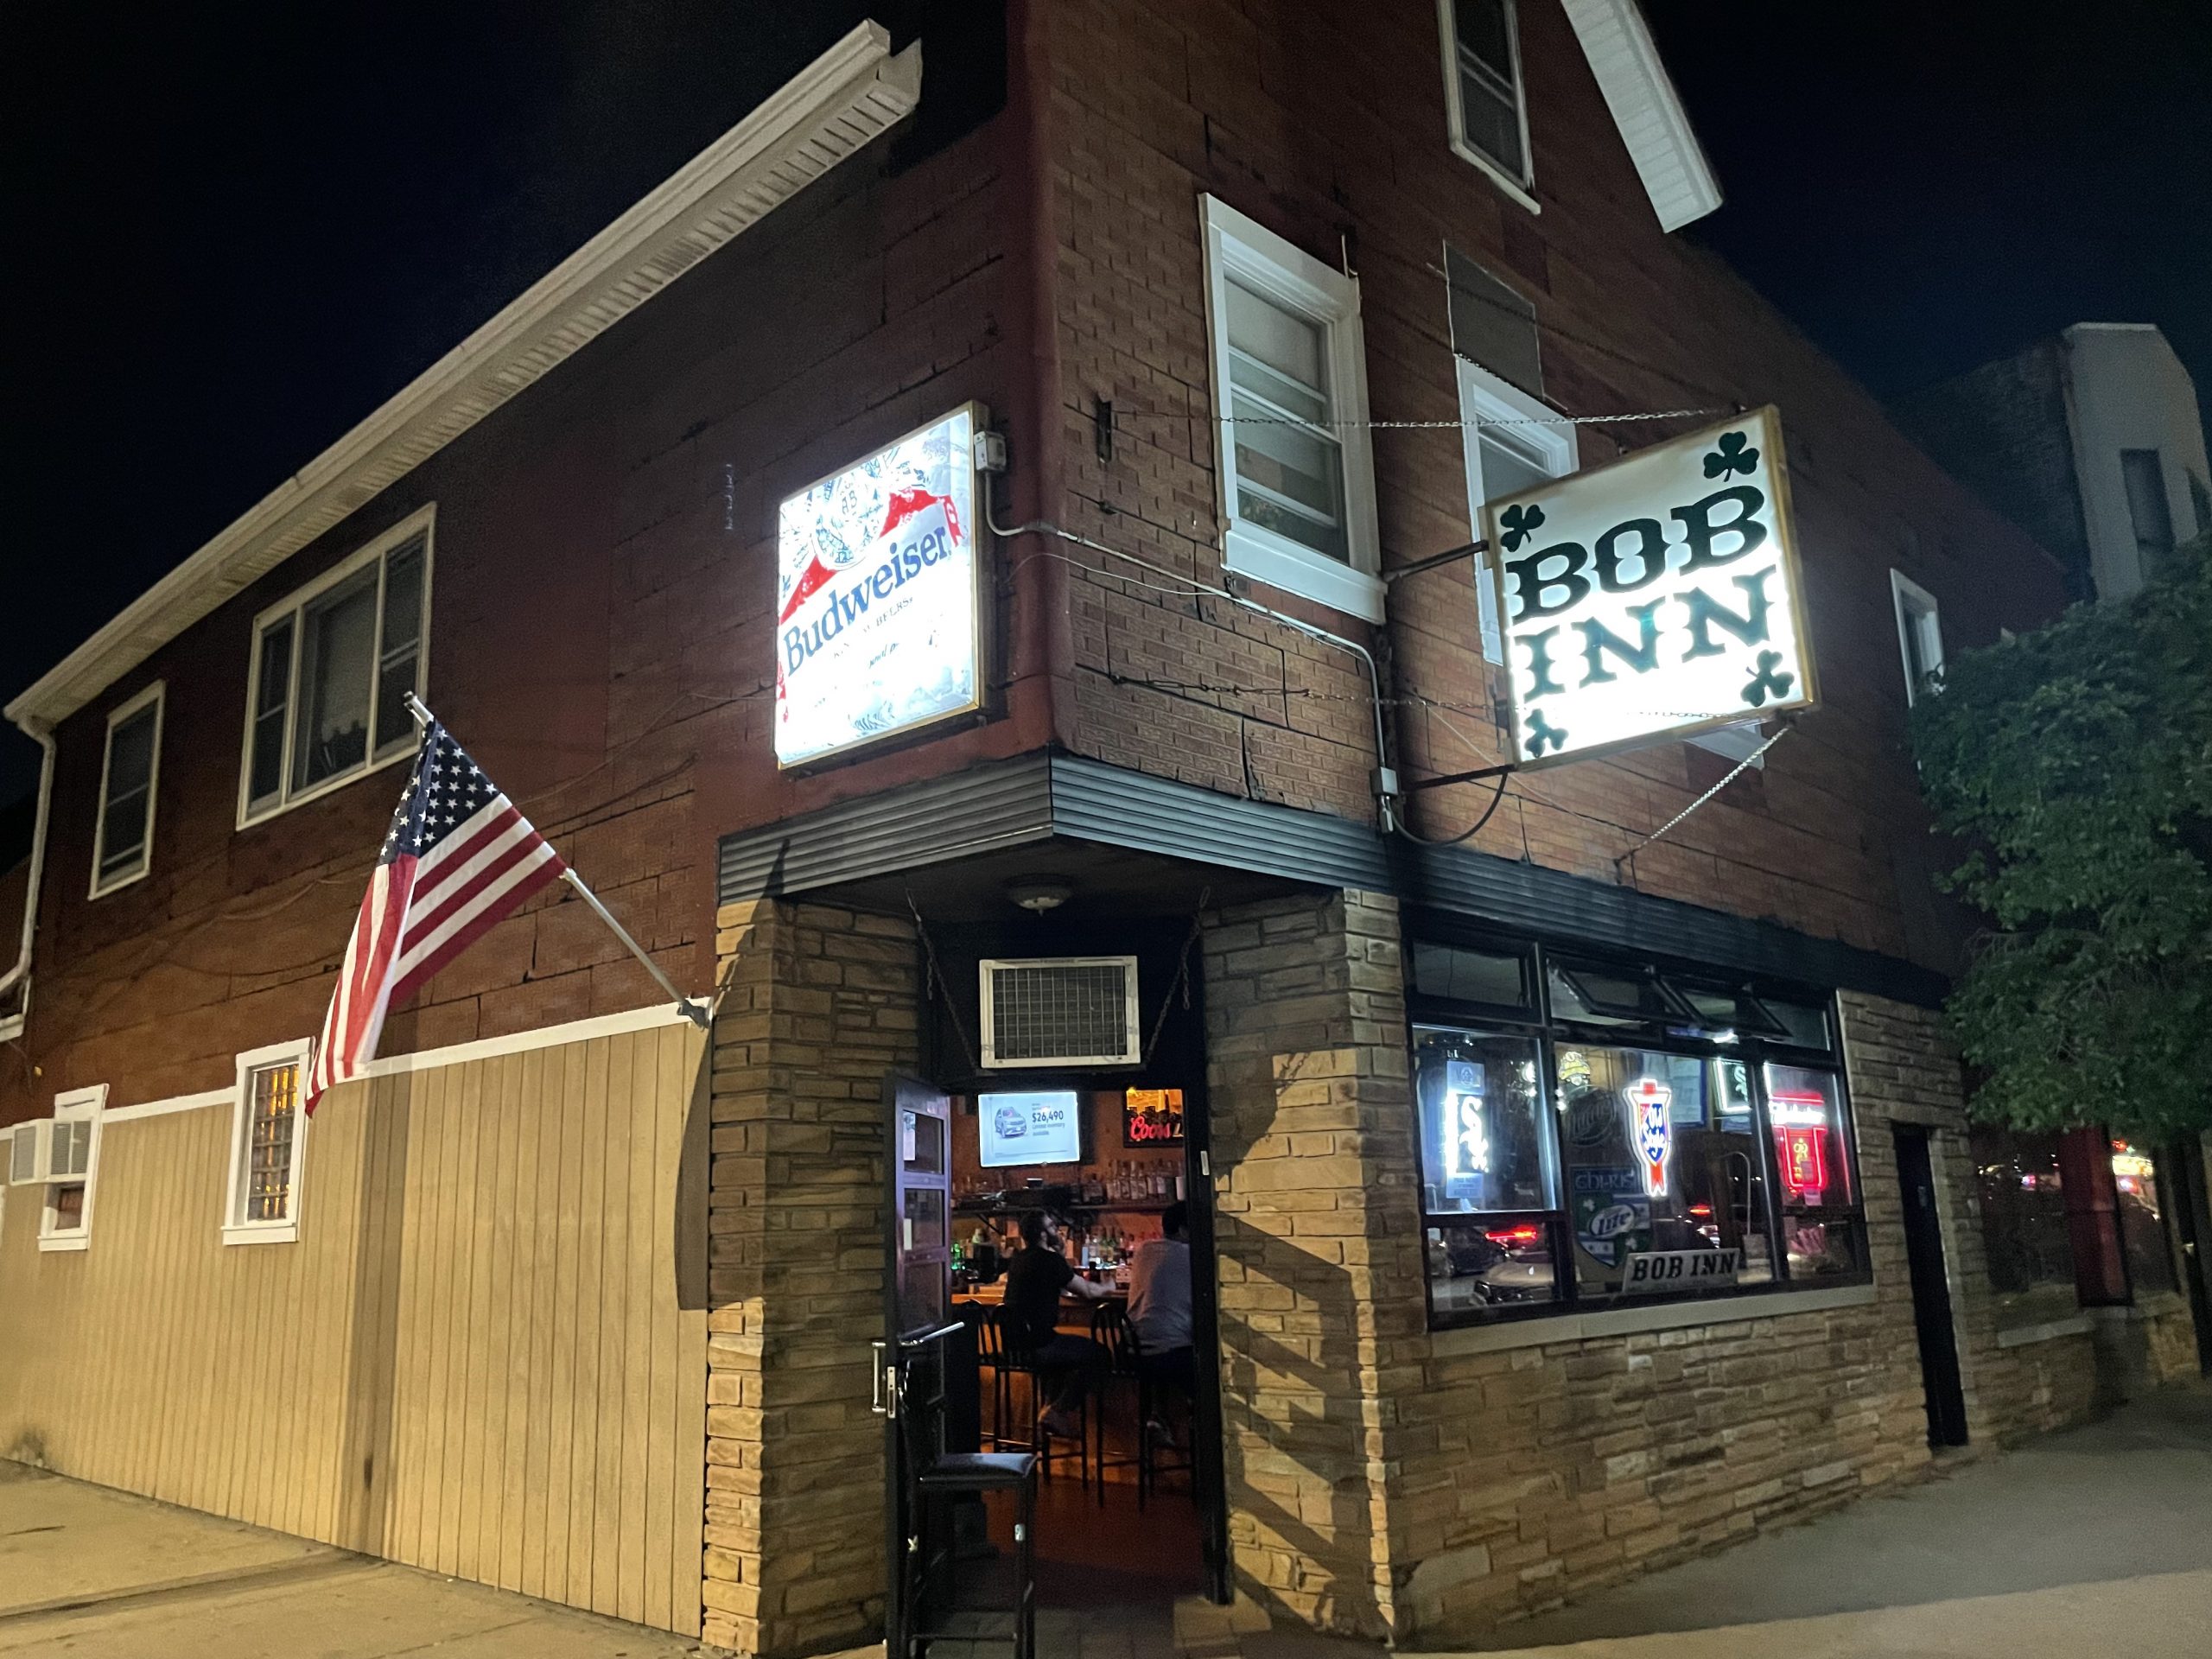 Bob Inn - Chicago Dive Bar - Exterior